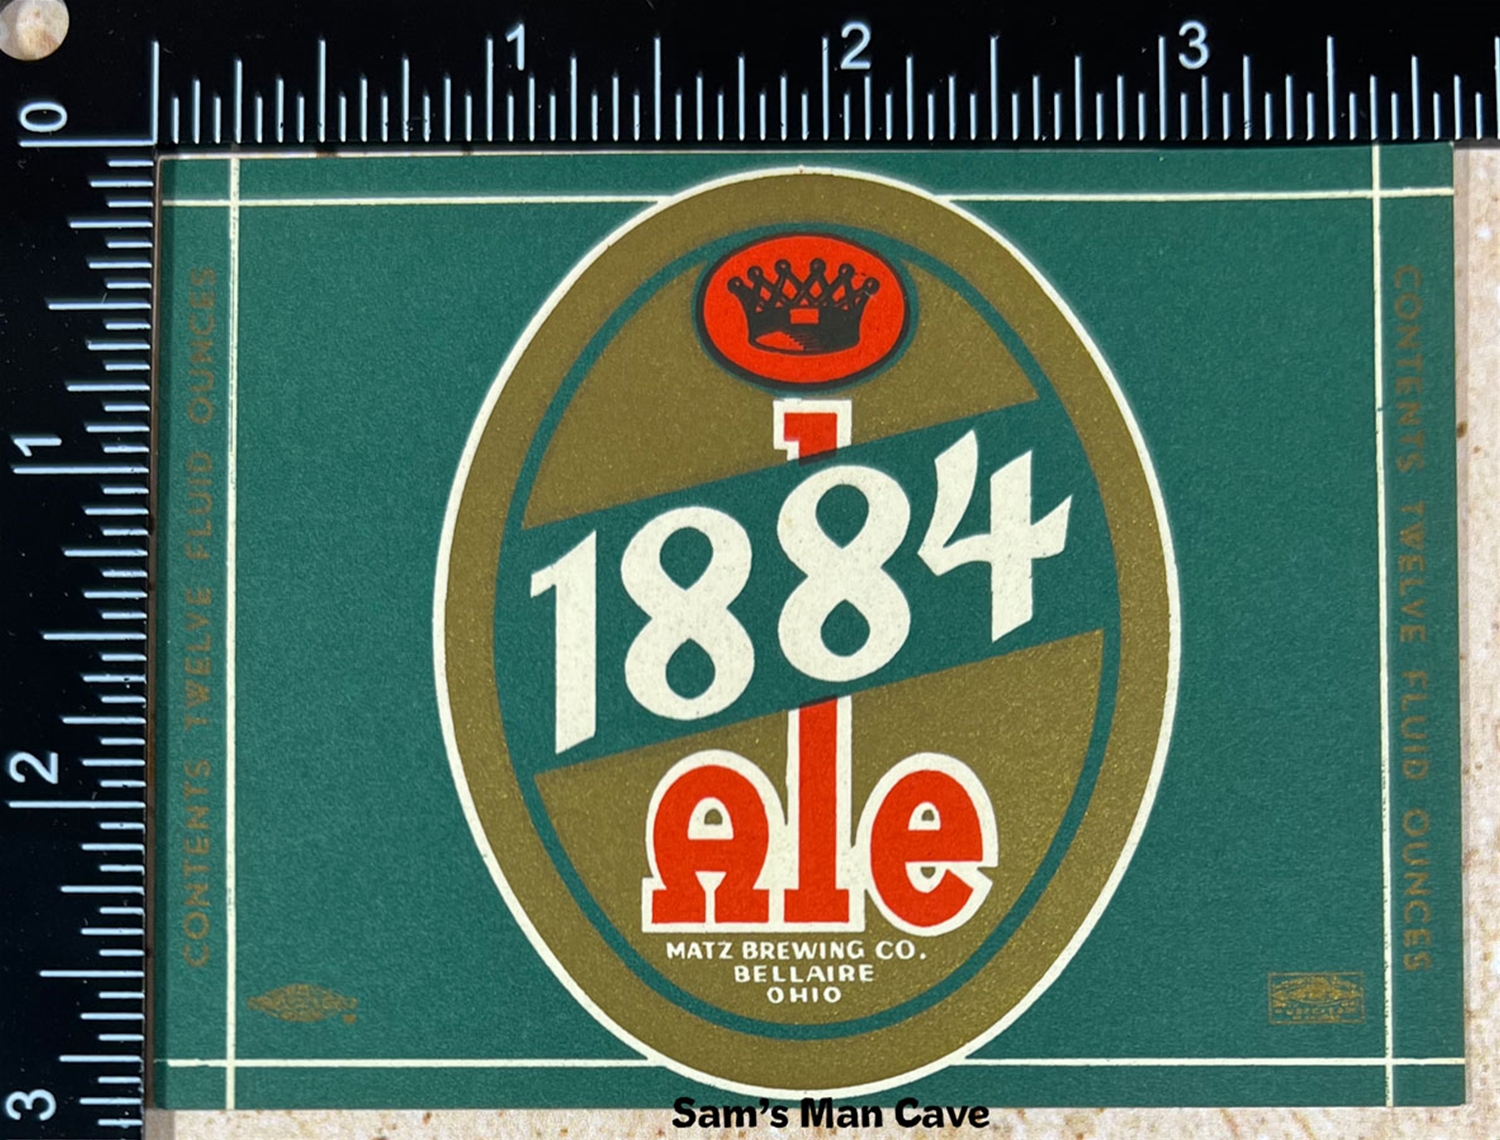 1884 Ale Beer Label